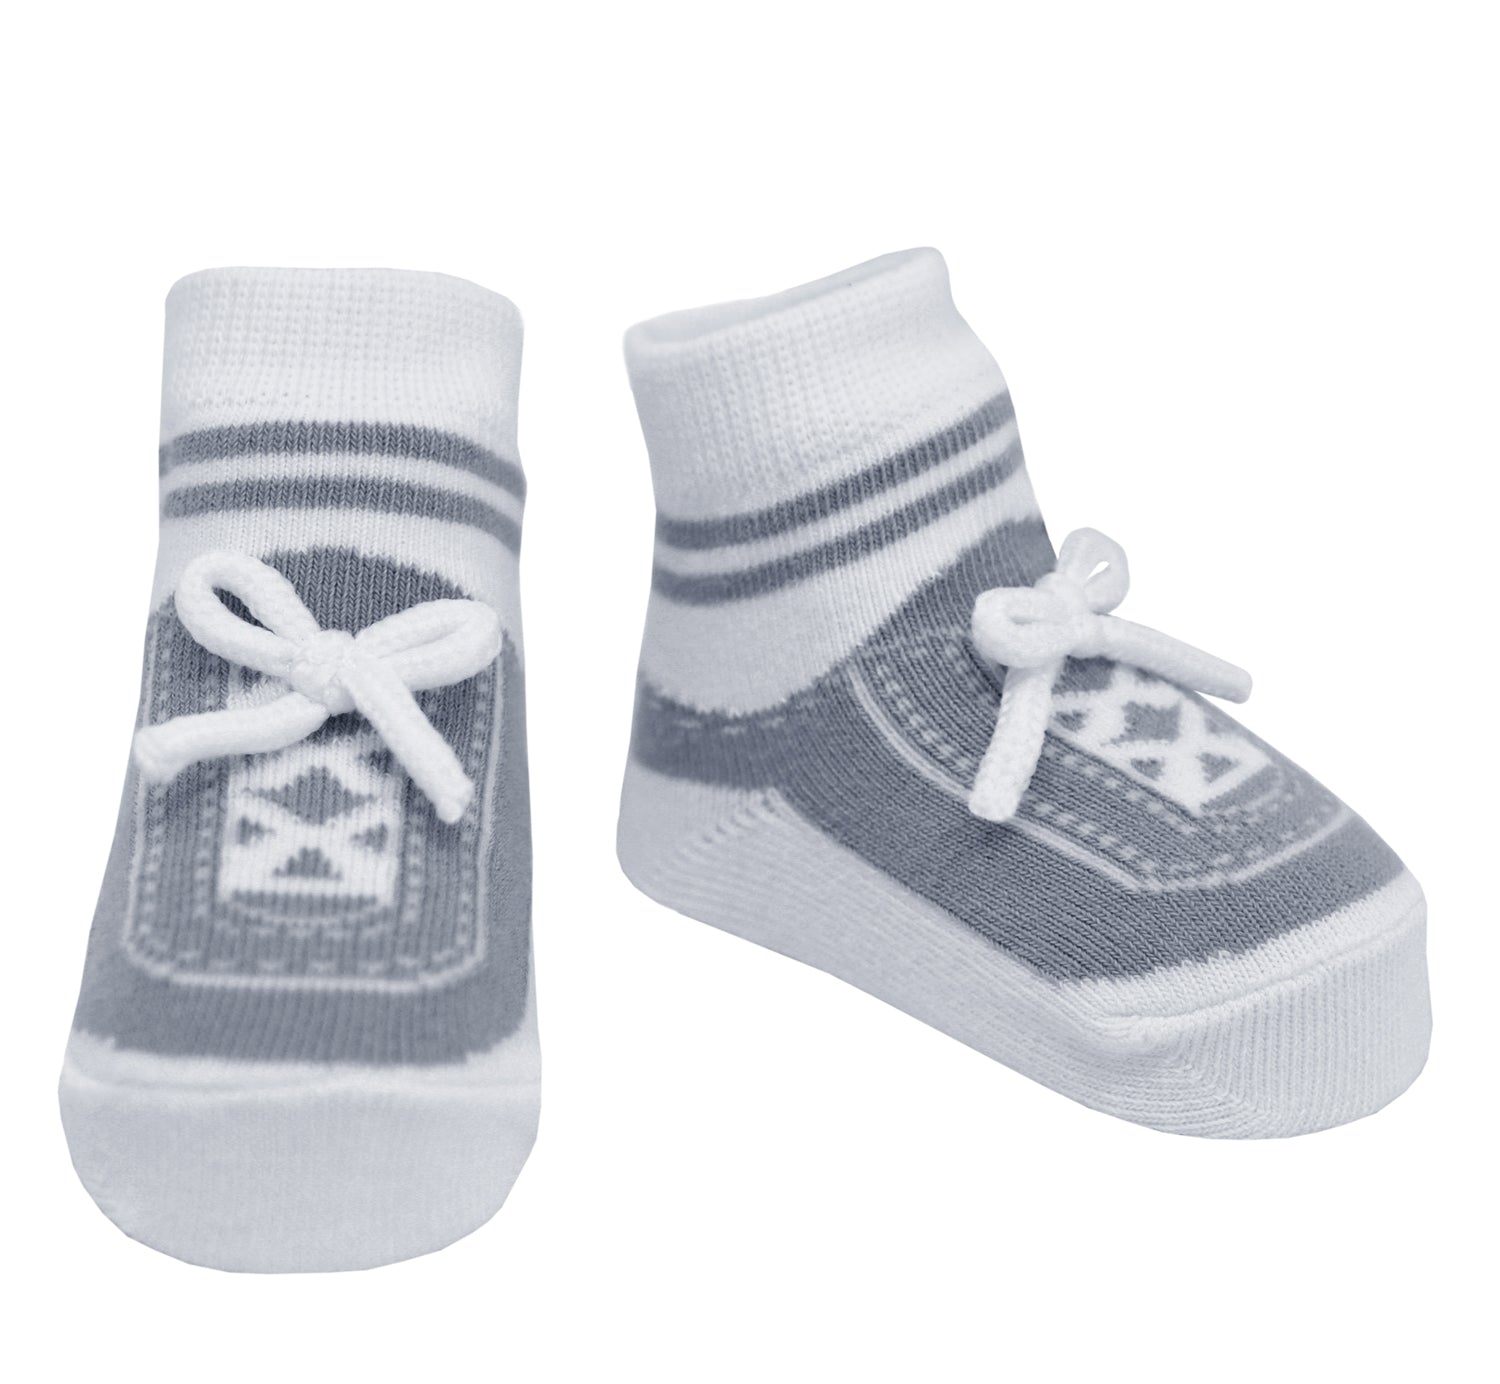 Grey baby infant socks with fake shoelaces infant newborn gift